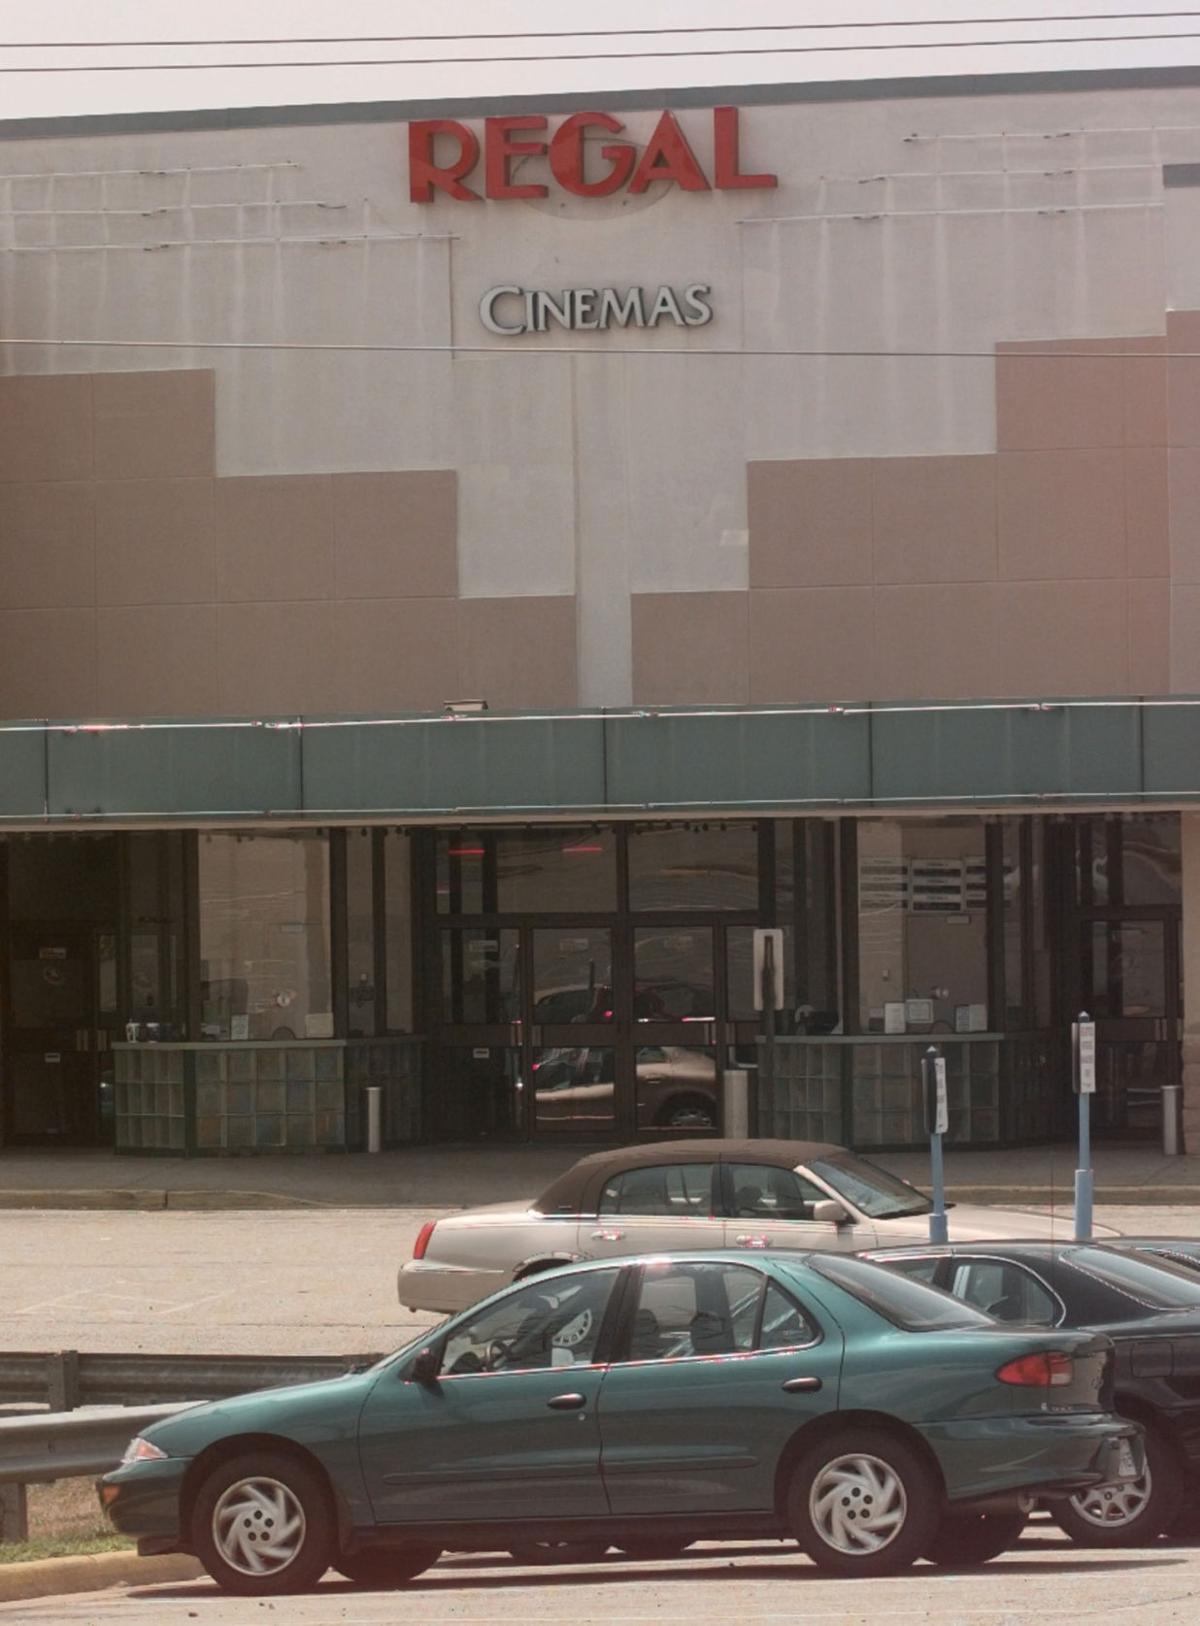 cloverleaf mall